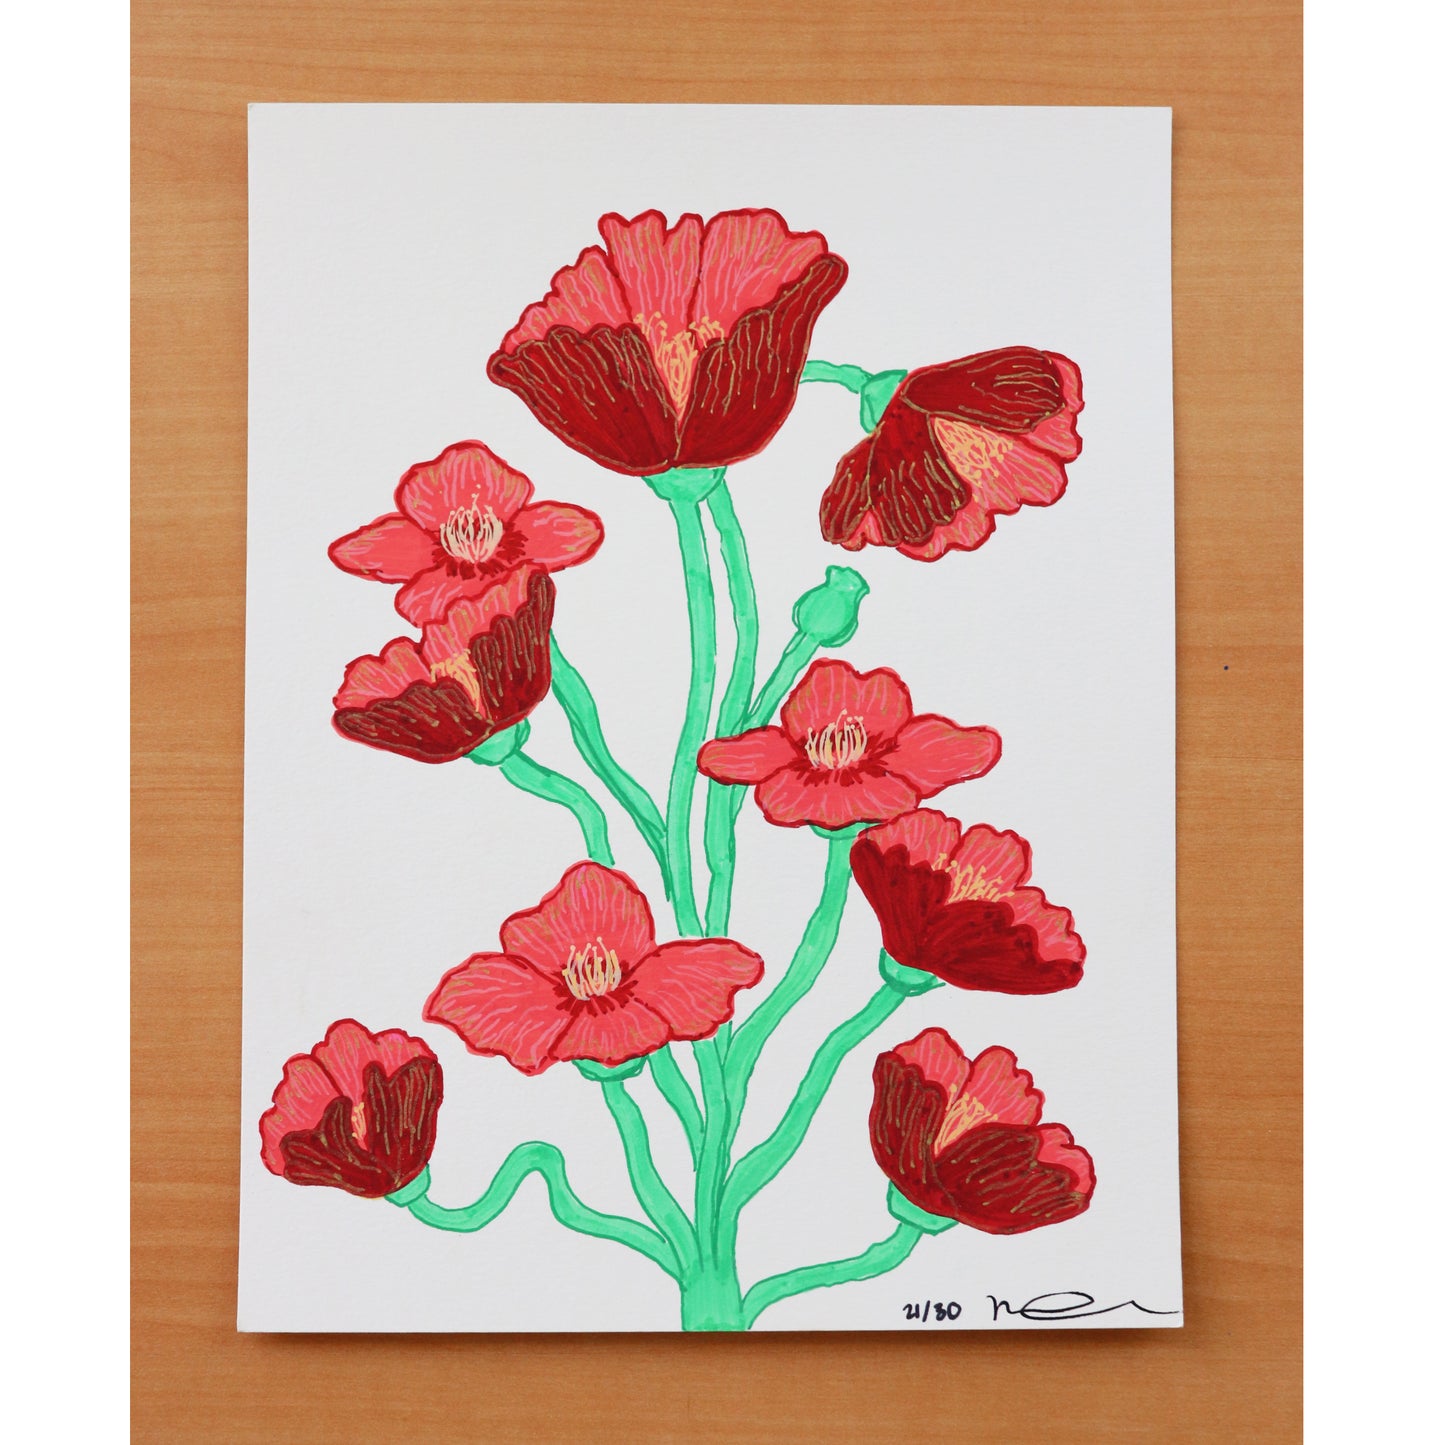 Little Delight #21: Opium Poppies